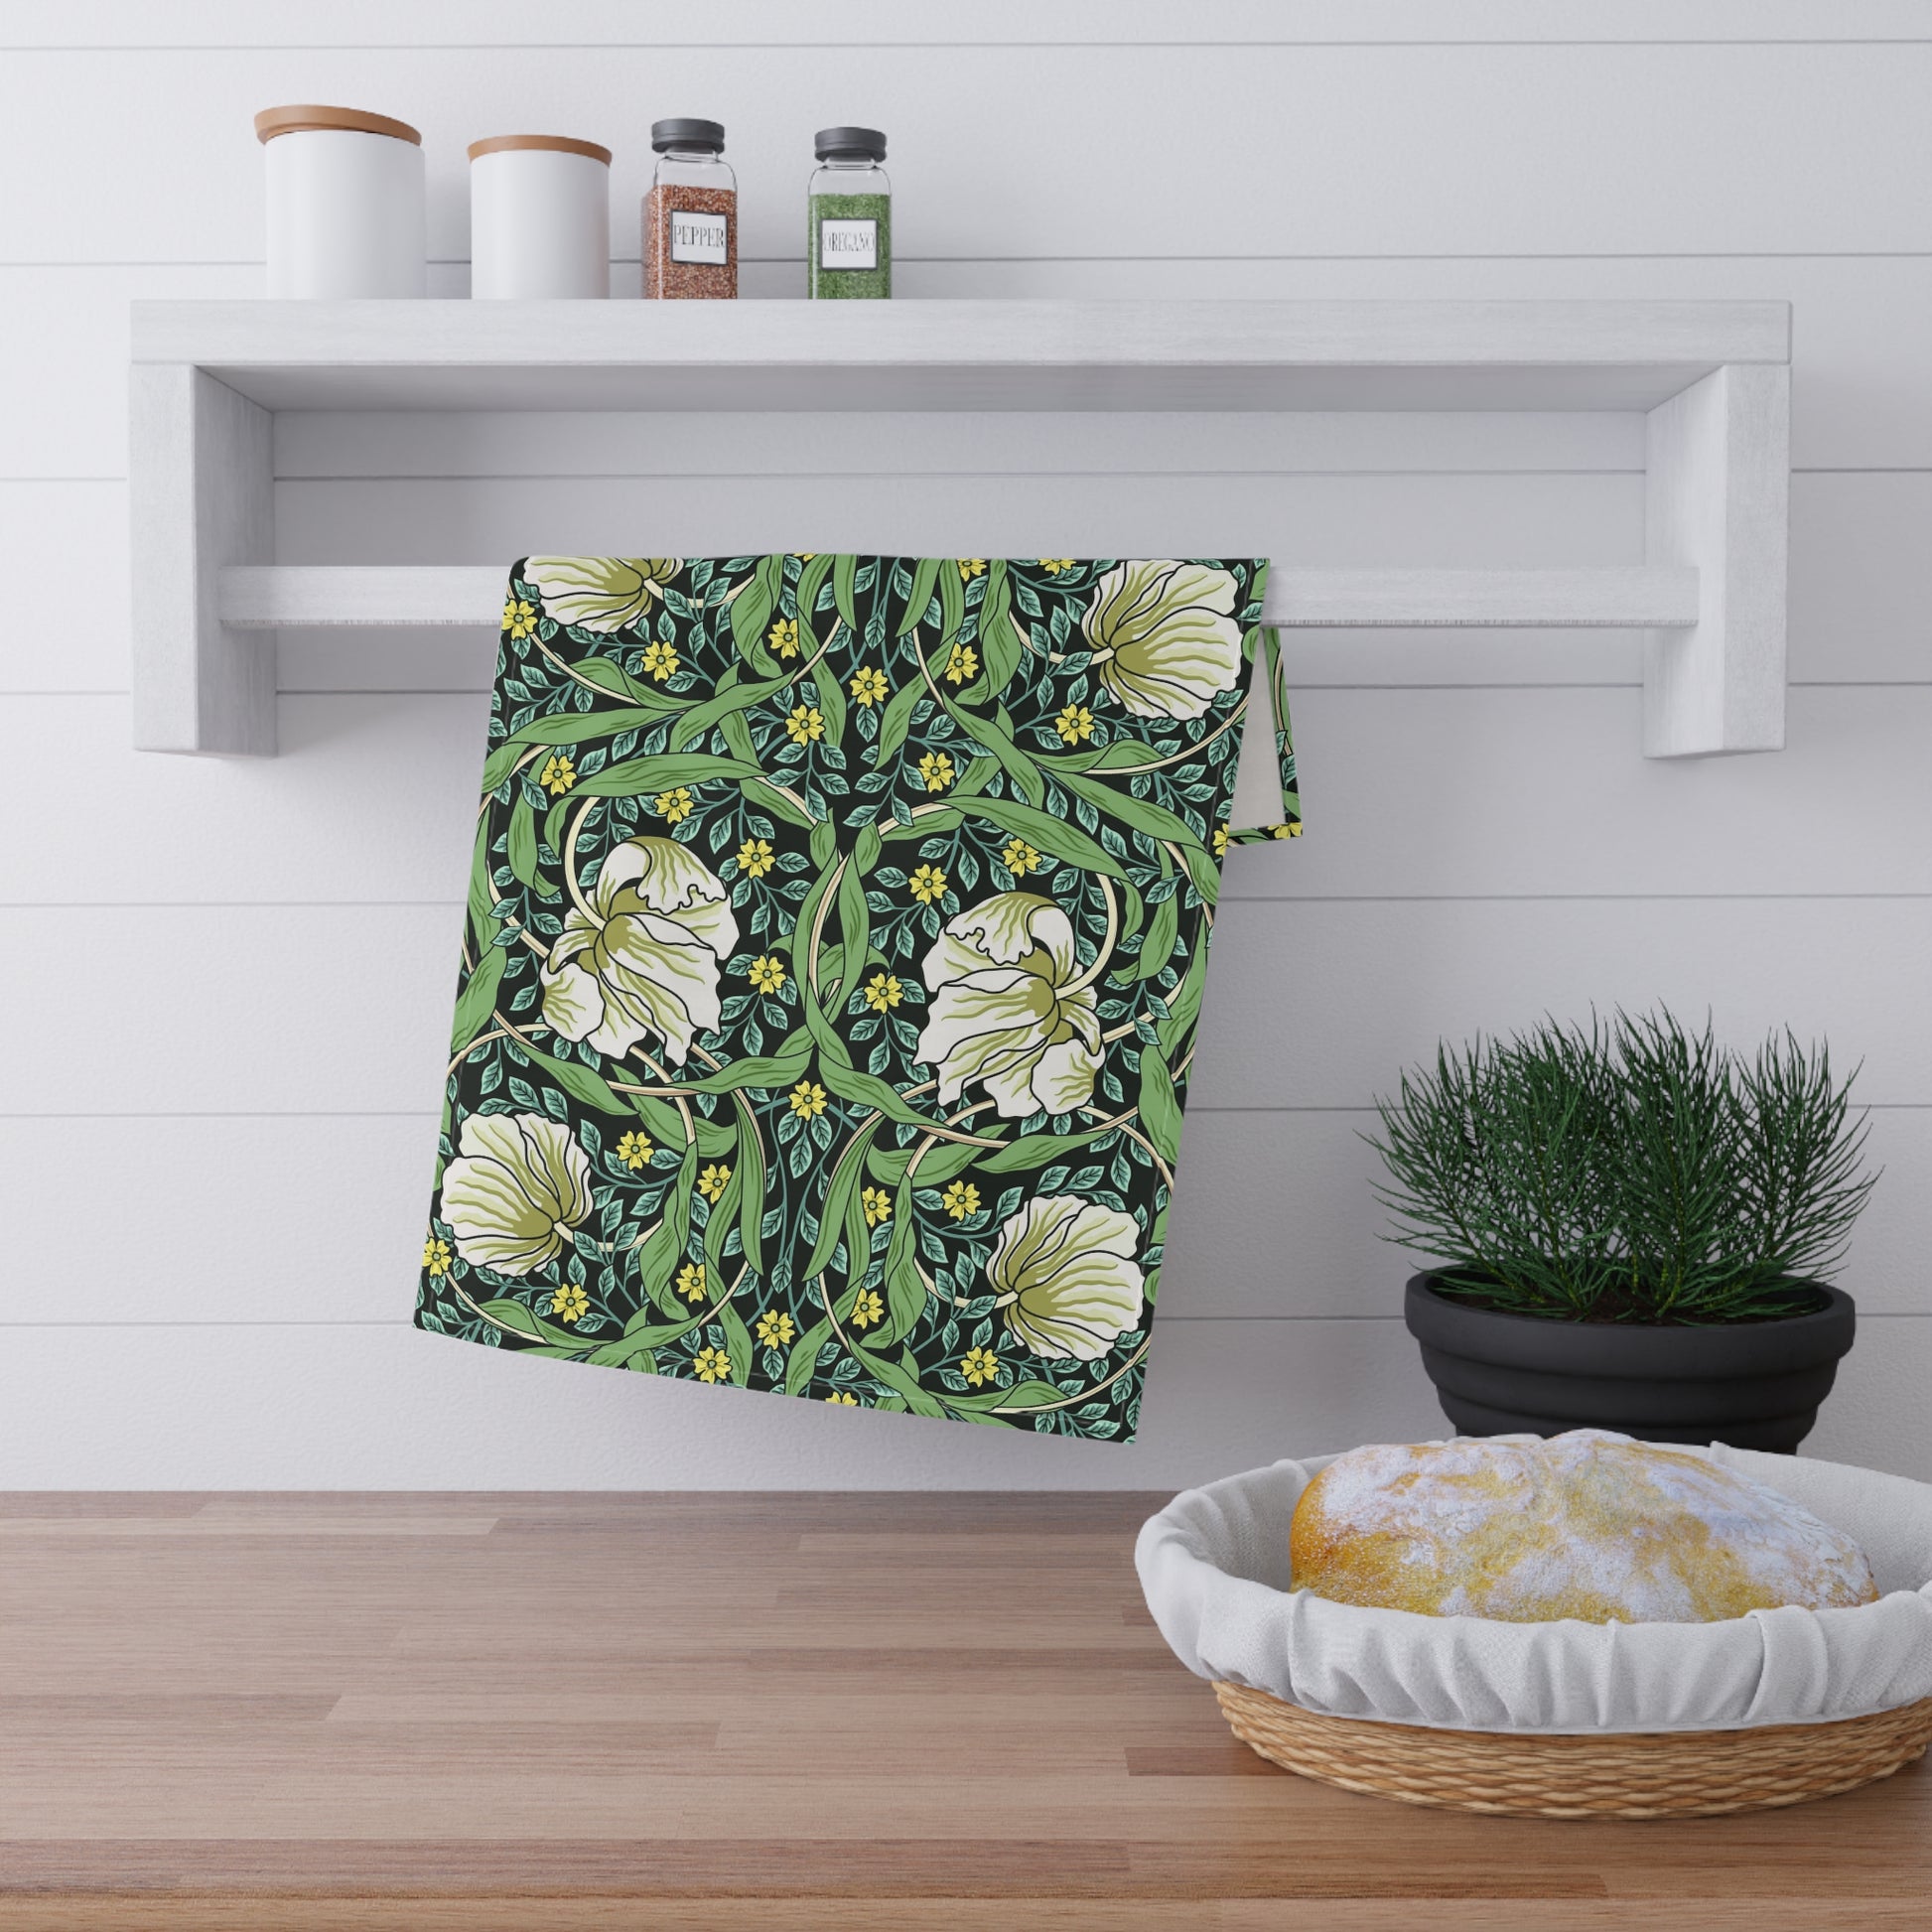 william-morris-co-kitchen-tea-towel-pimpernel-collection-green-12